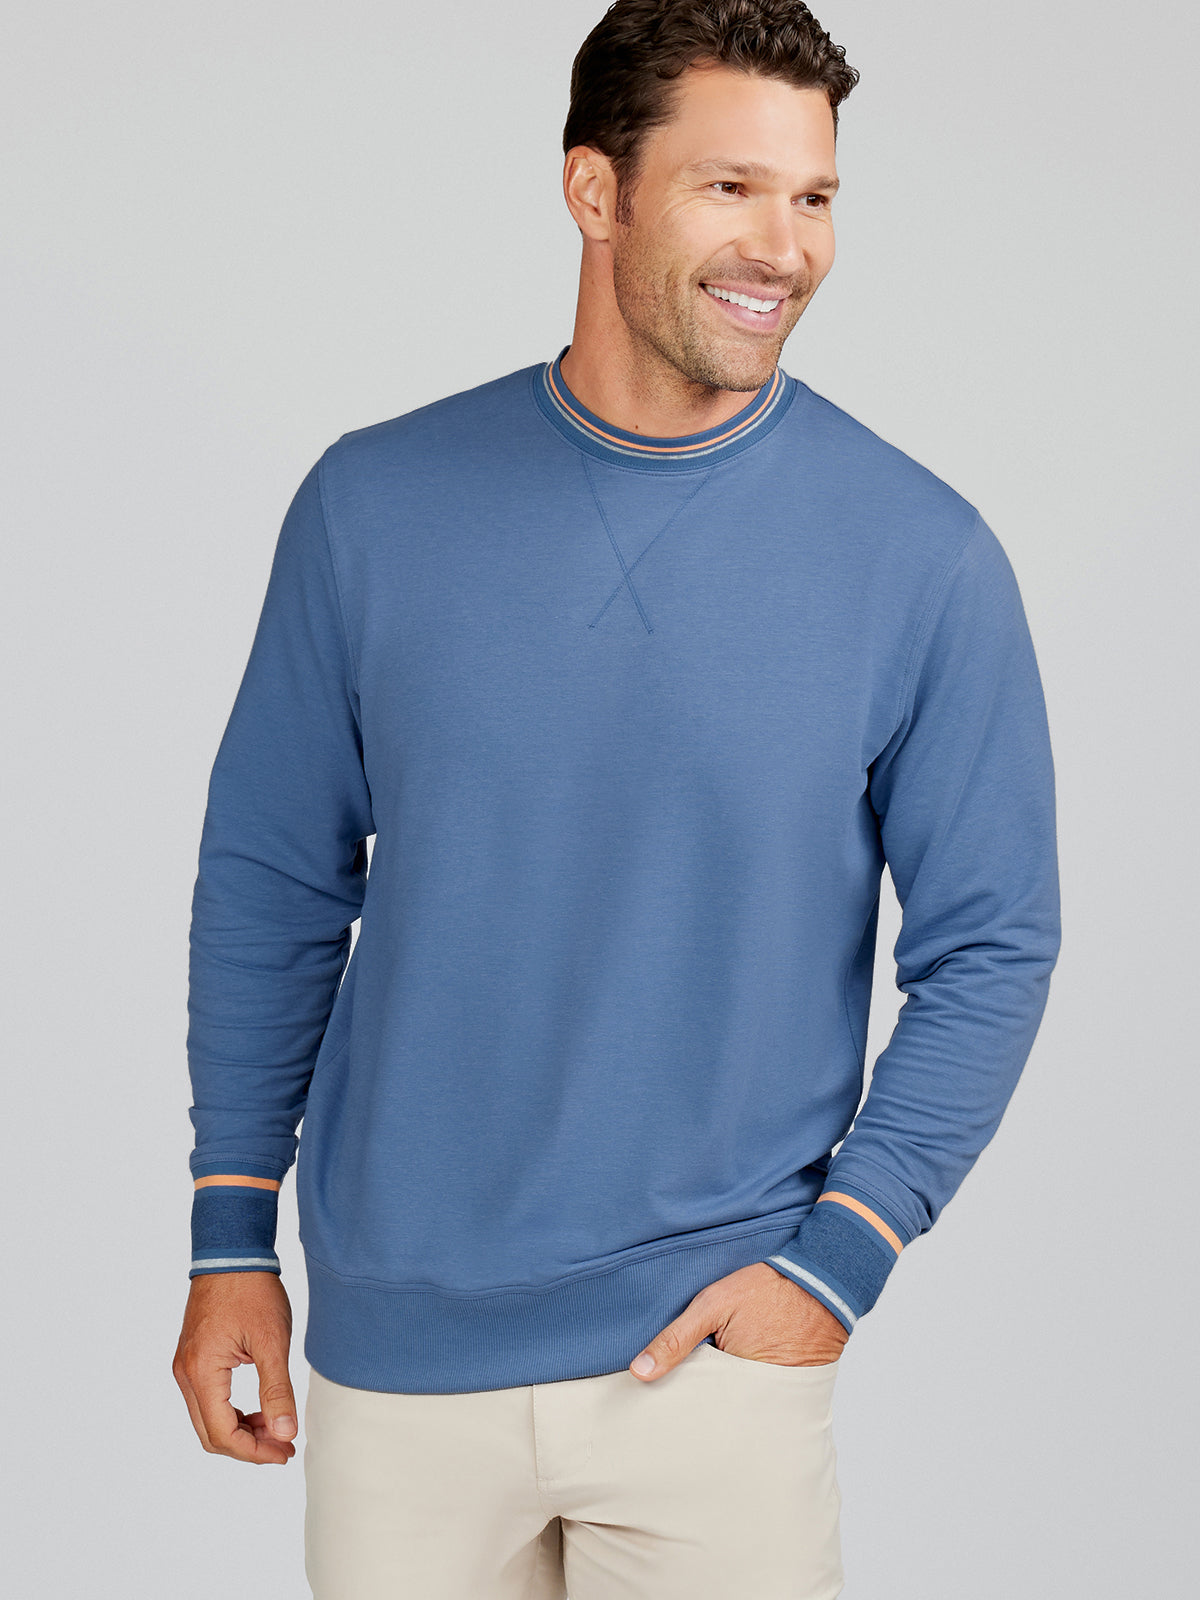 Men's Varsity French Terry Sweatshirt